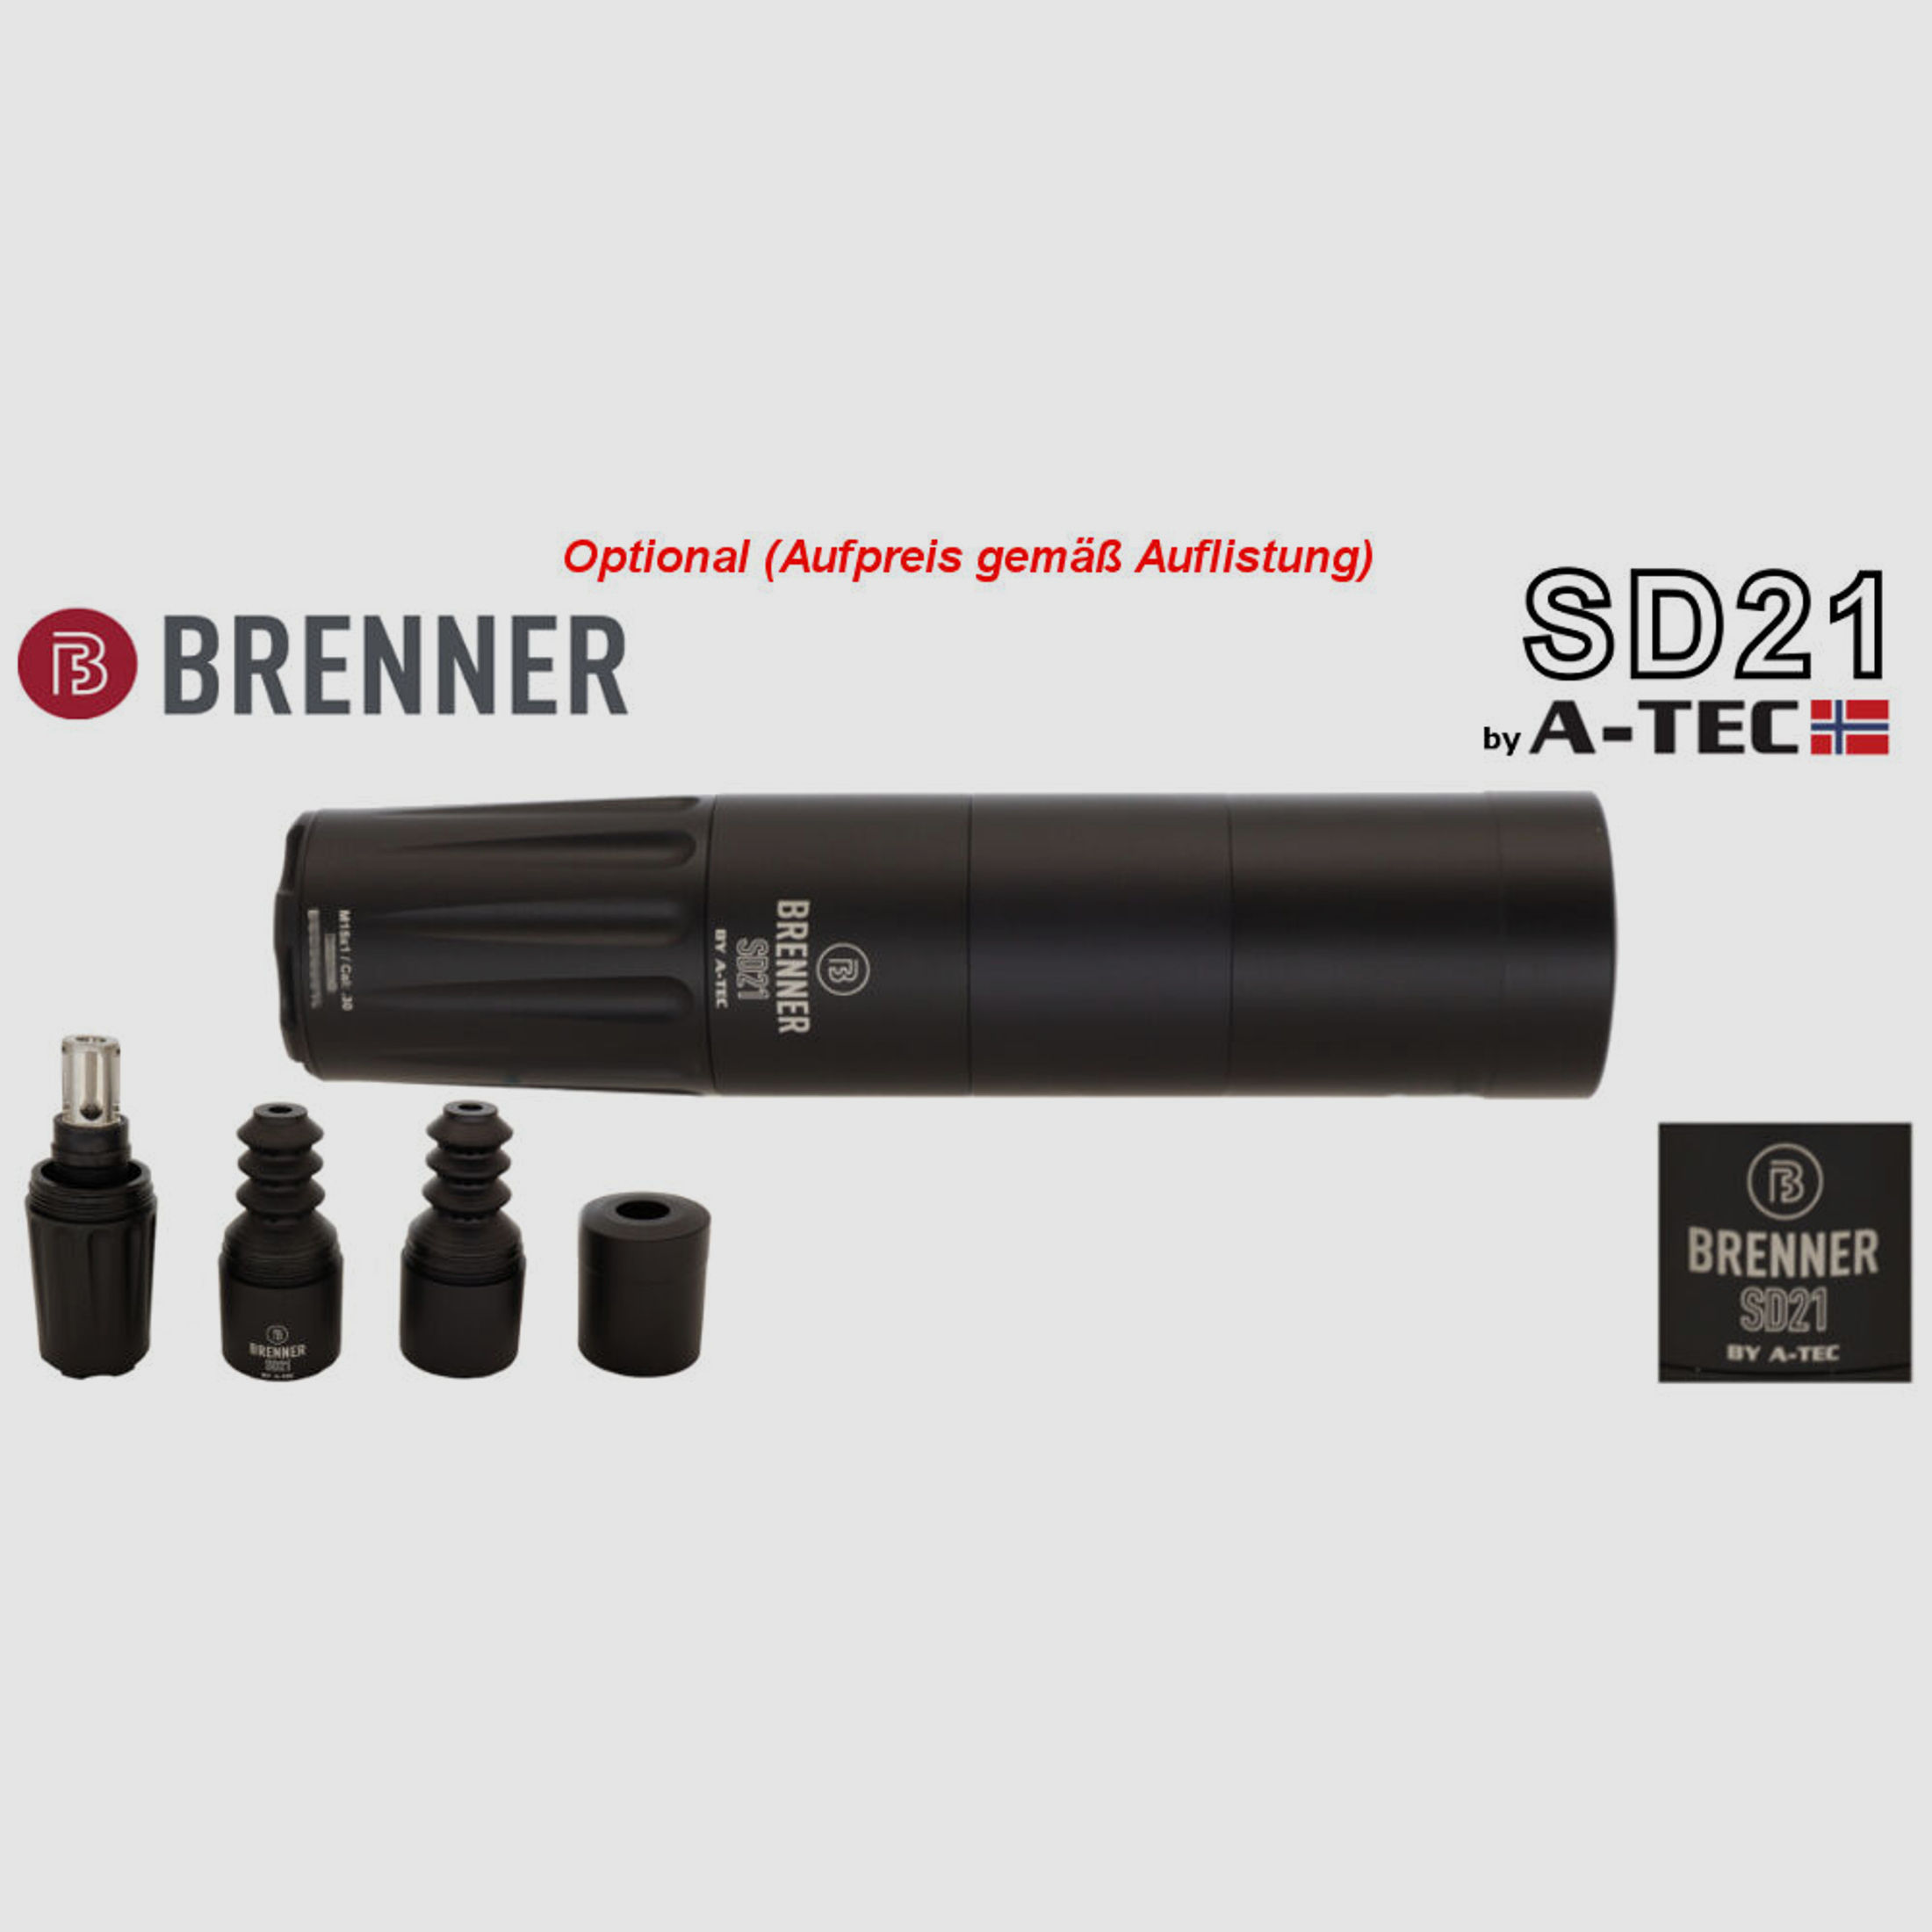 Brenner	 BR20 B&H Prohunter Flex Lochschaft mit Bushnell 2.5-15x50 Jagd Repetierer